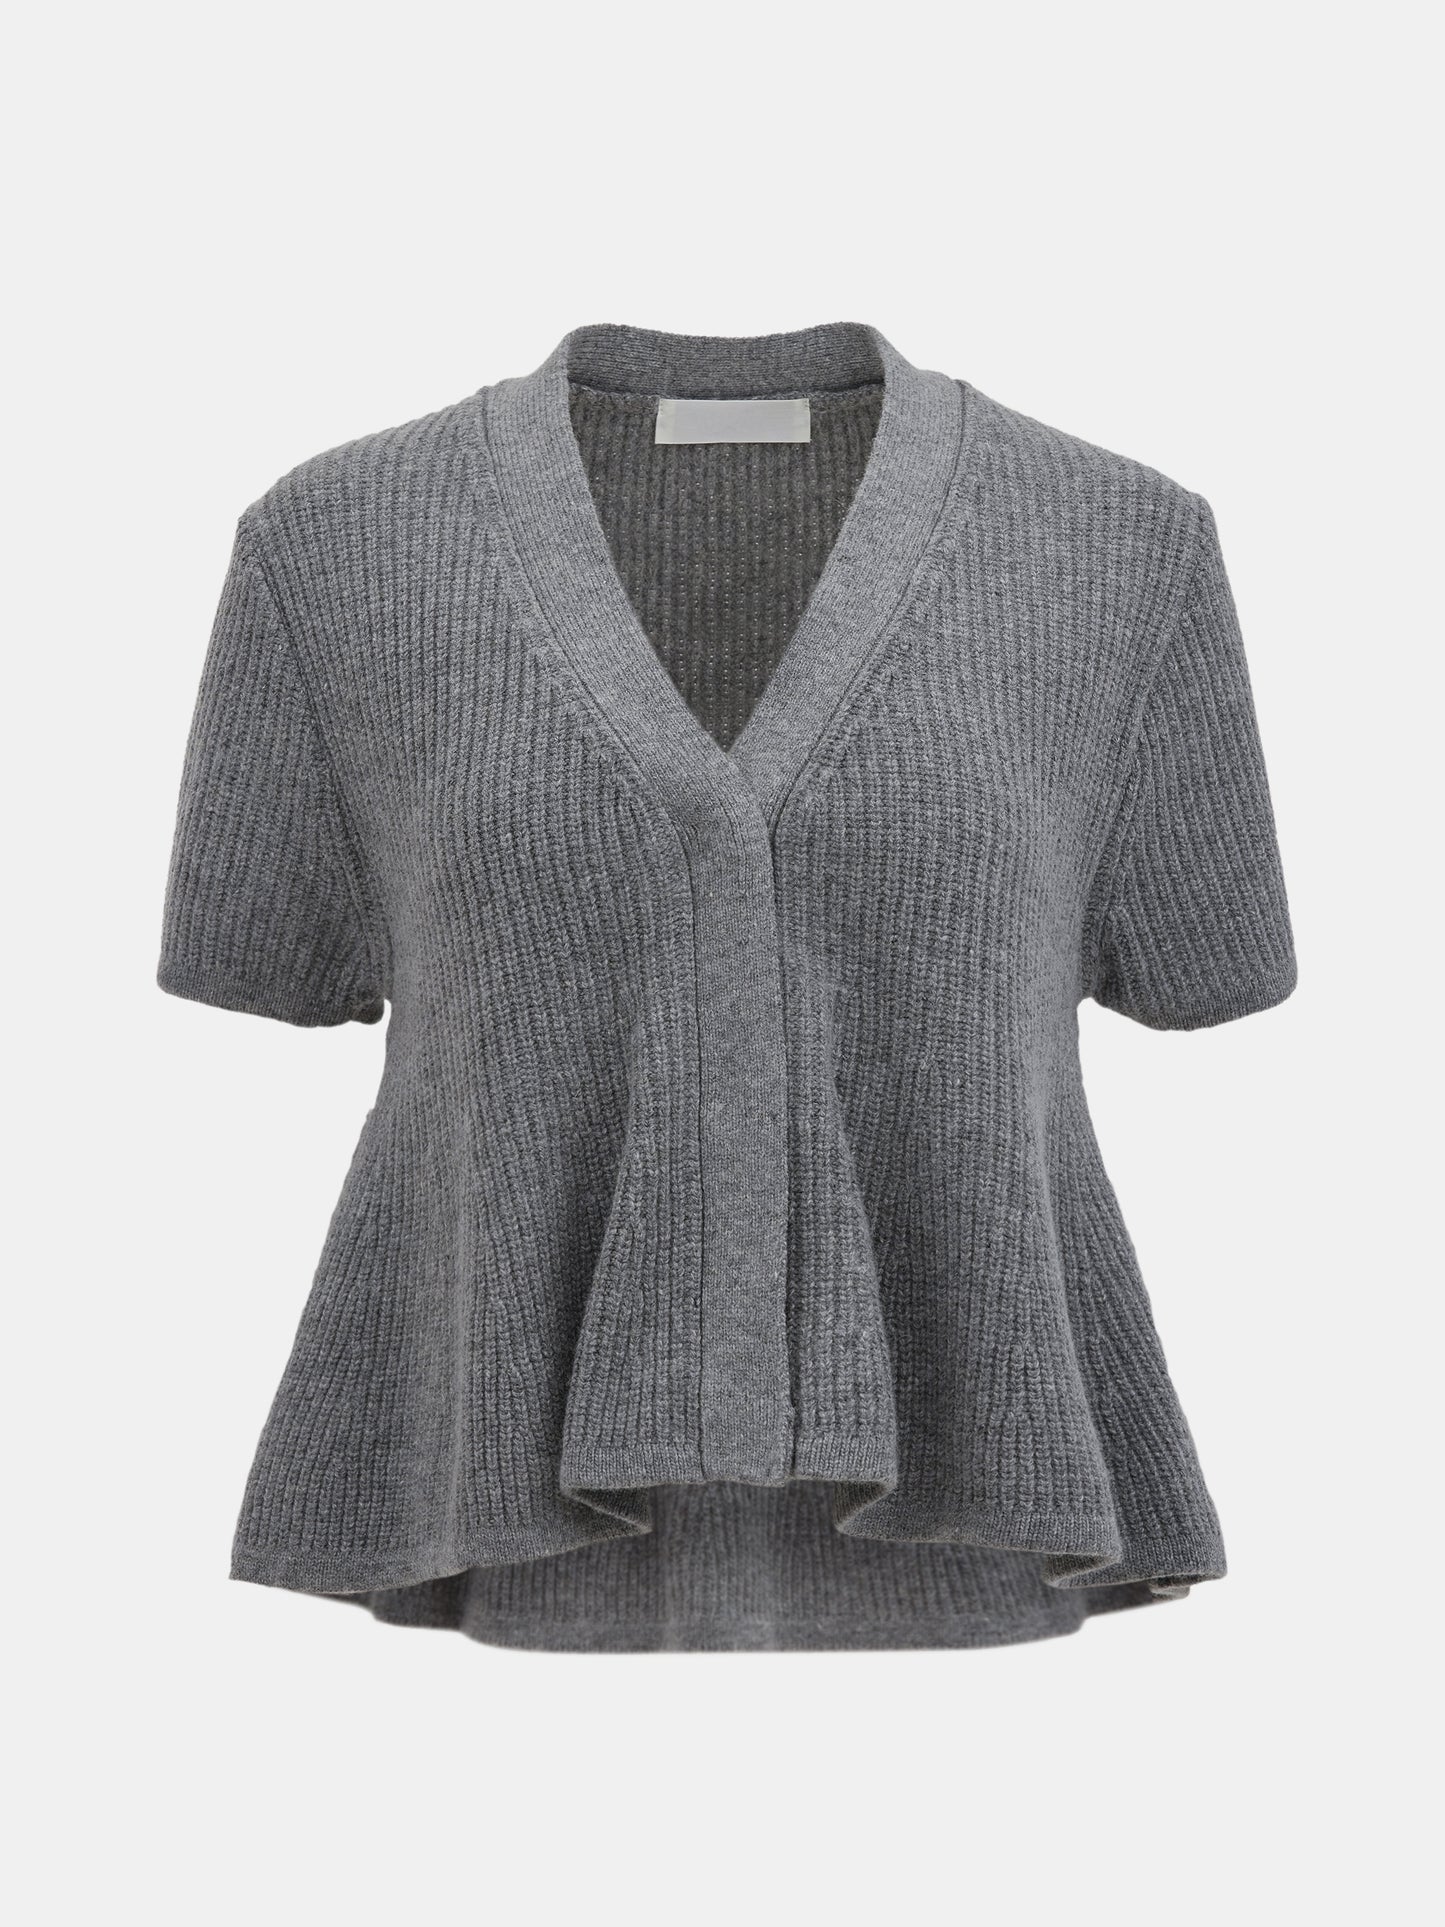 Peplum Wool Knit Top, Grey